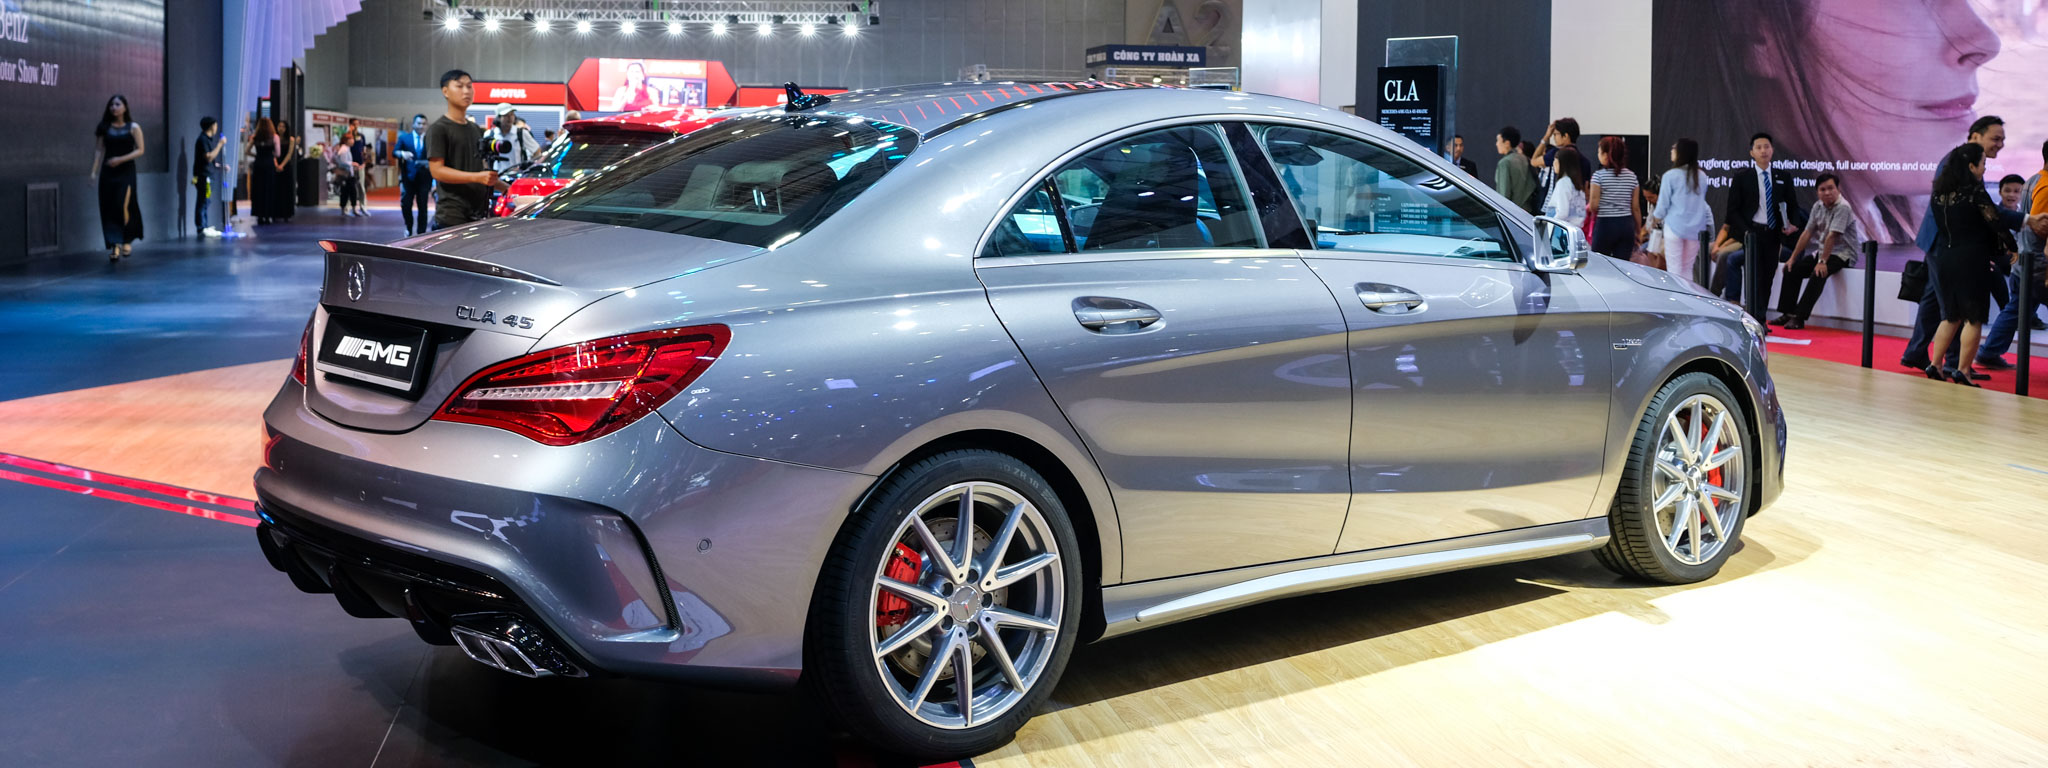 Ra mắt phiên bản cải tiến Mercedes CLA 45  Mercedes Vietnam  Trang web  bán hàng MercedesBenz